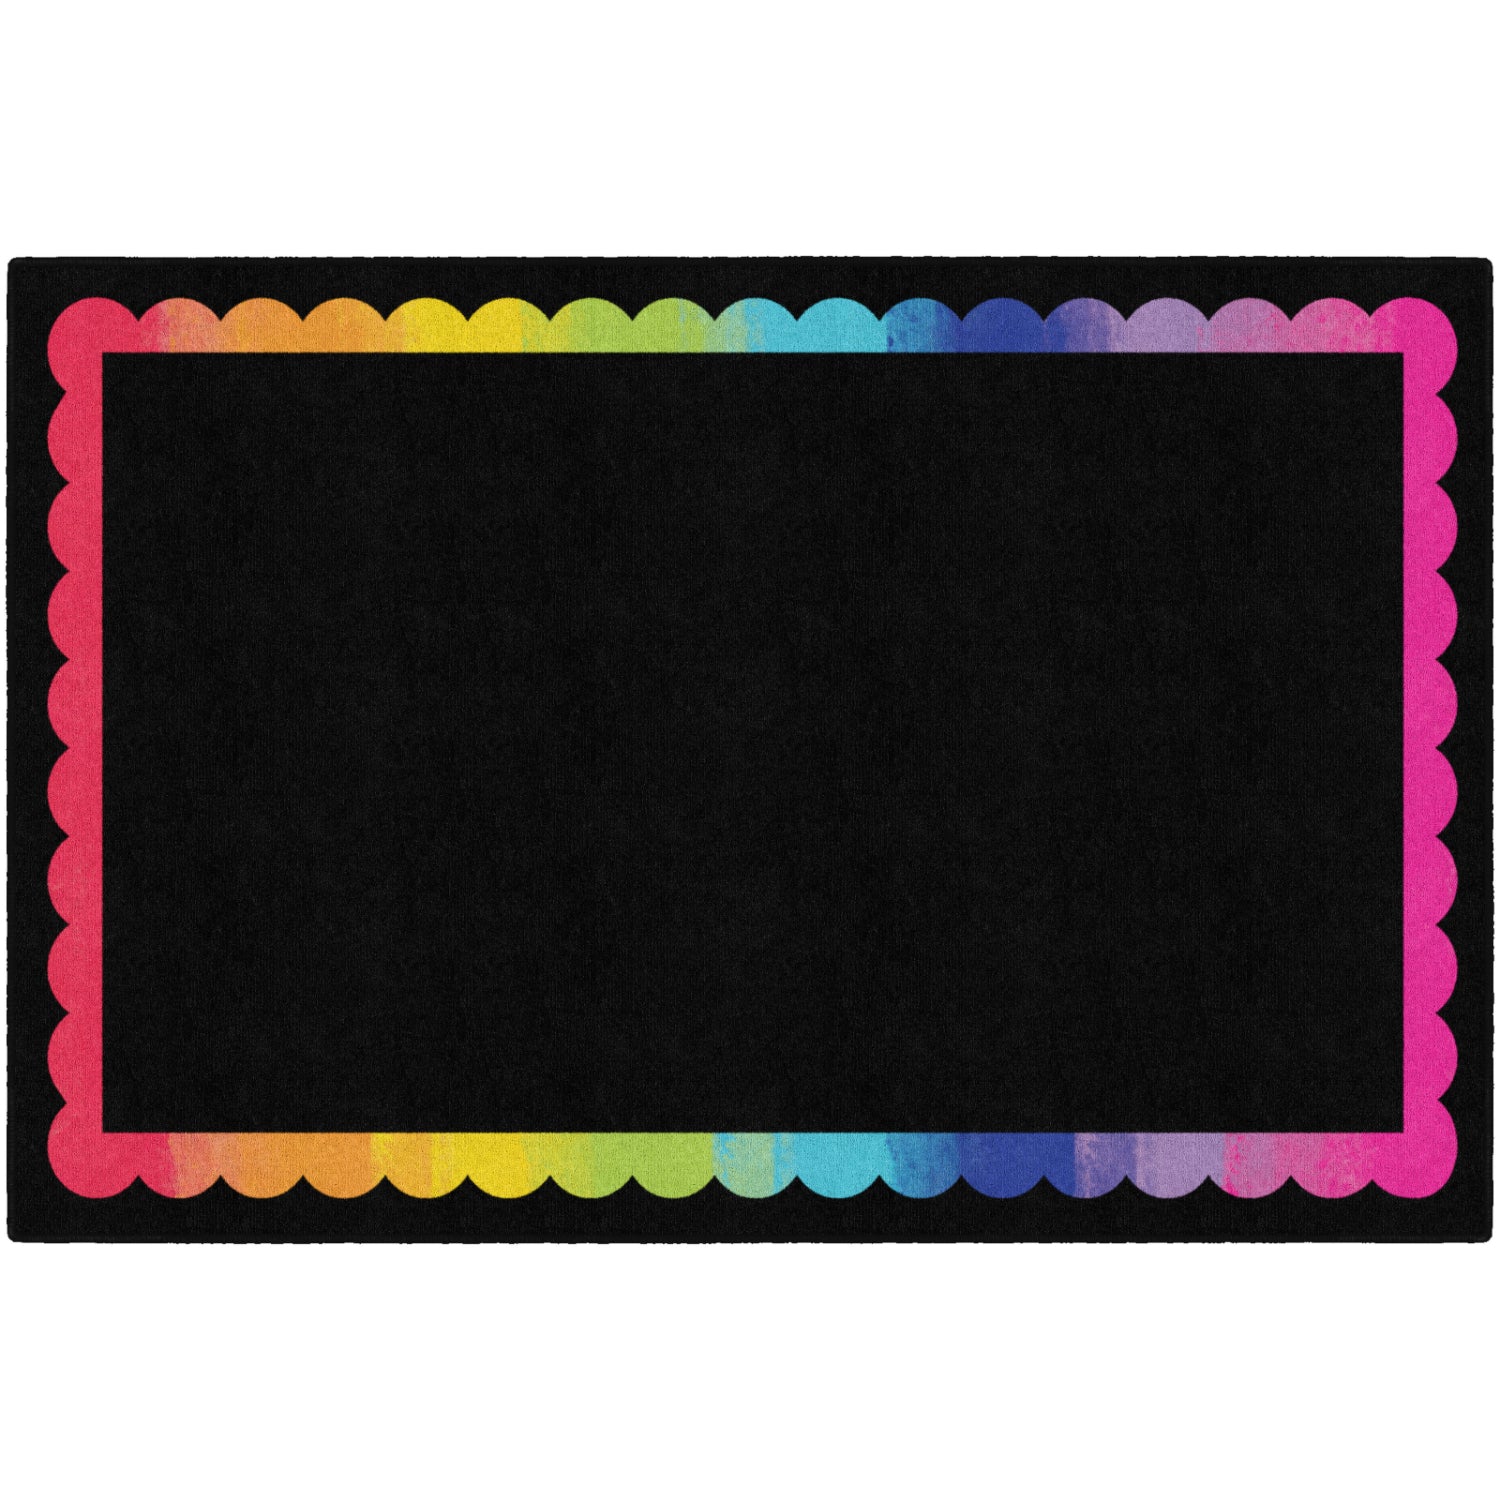 Schoolgirl Style Black with Rainbow Scallop Border Rugs